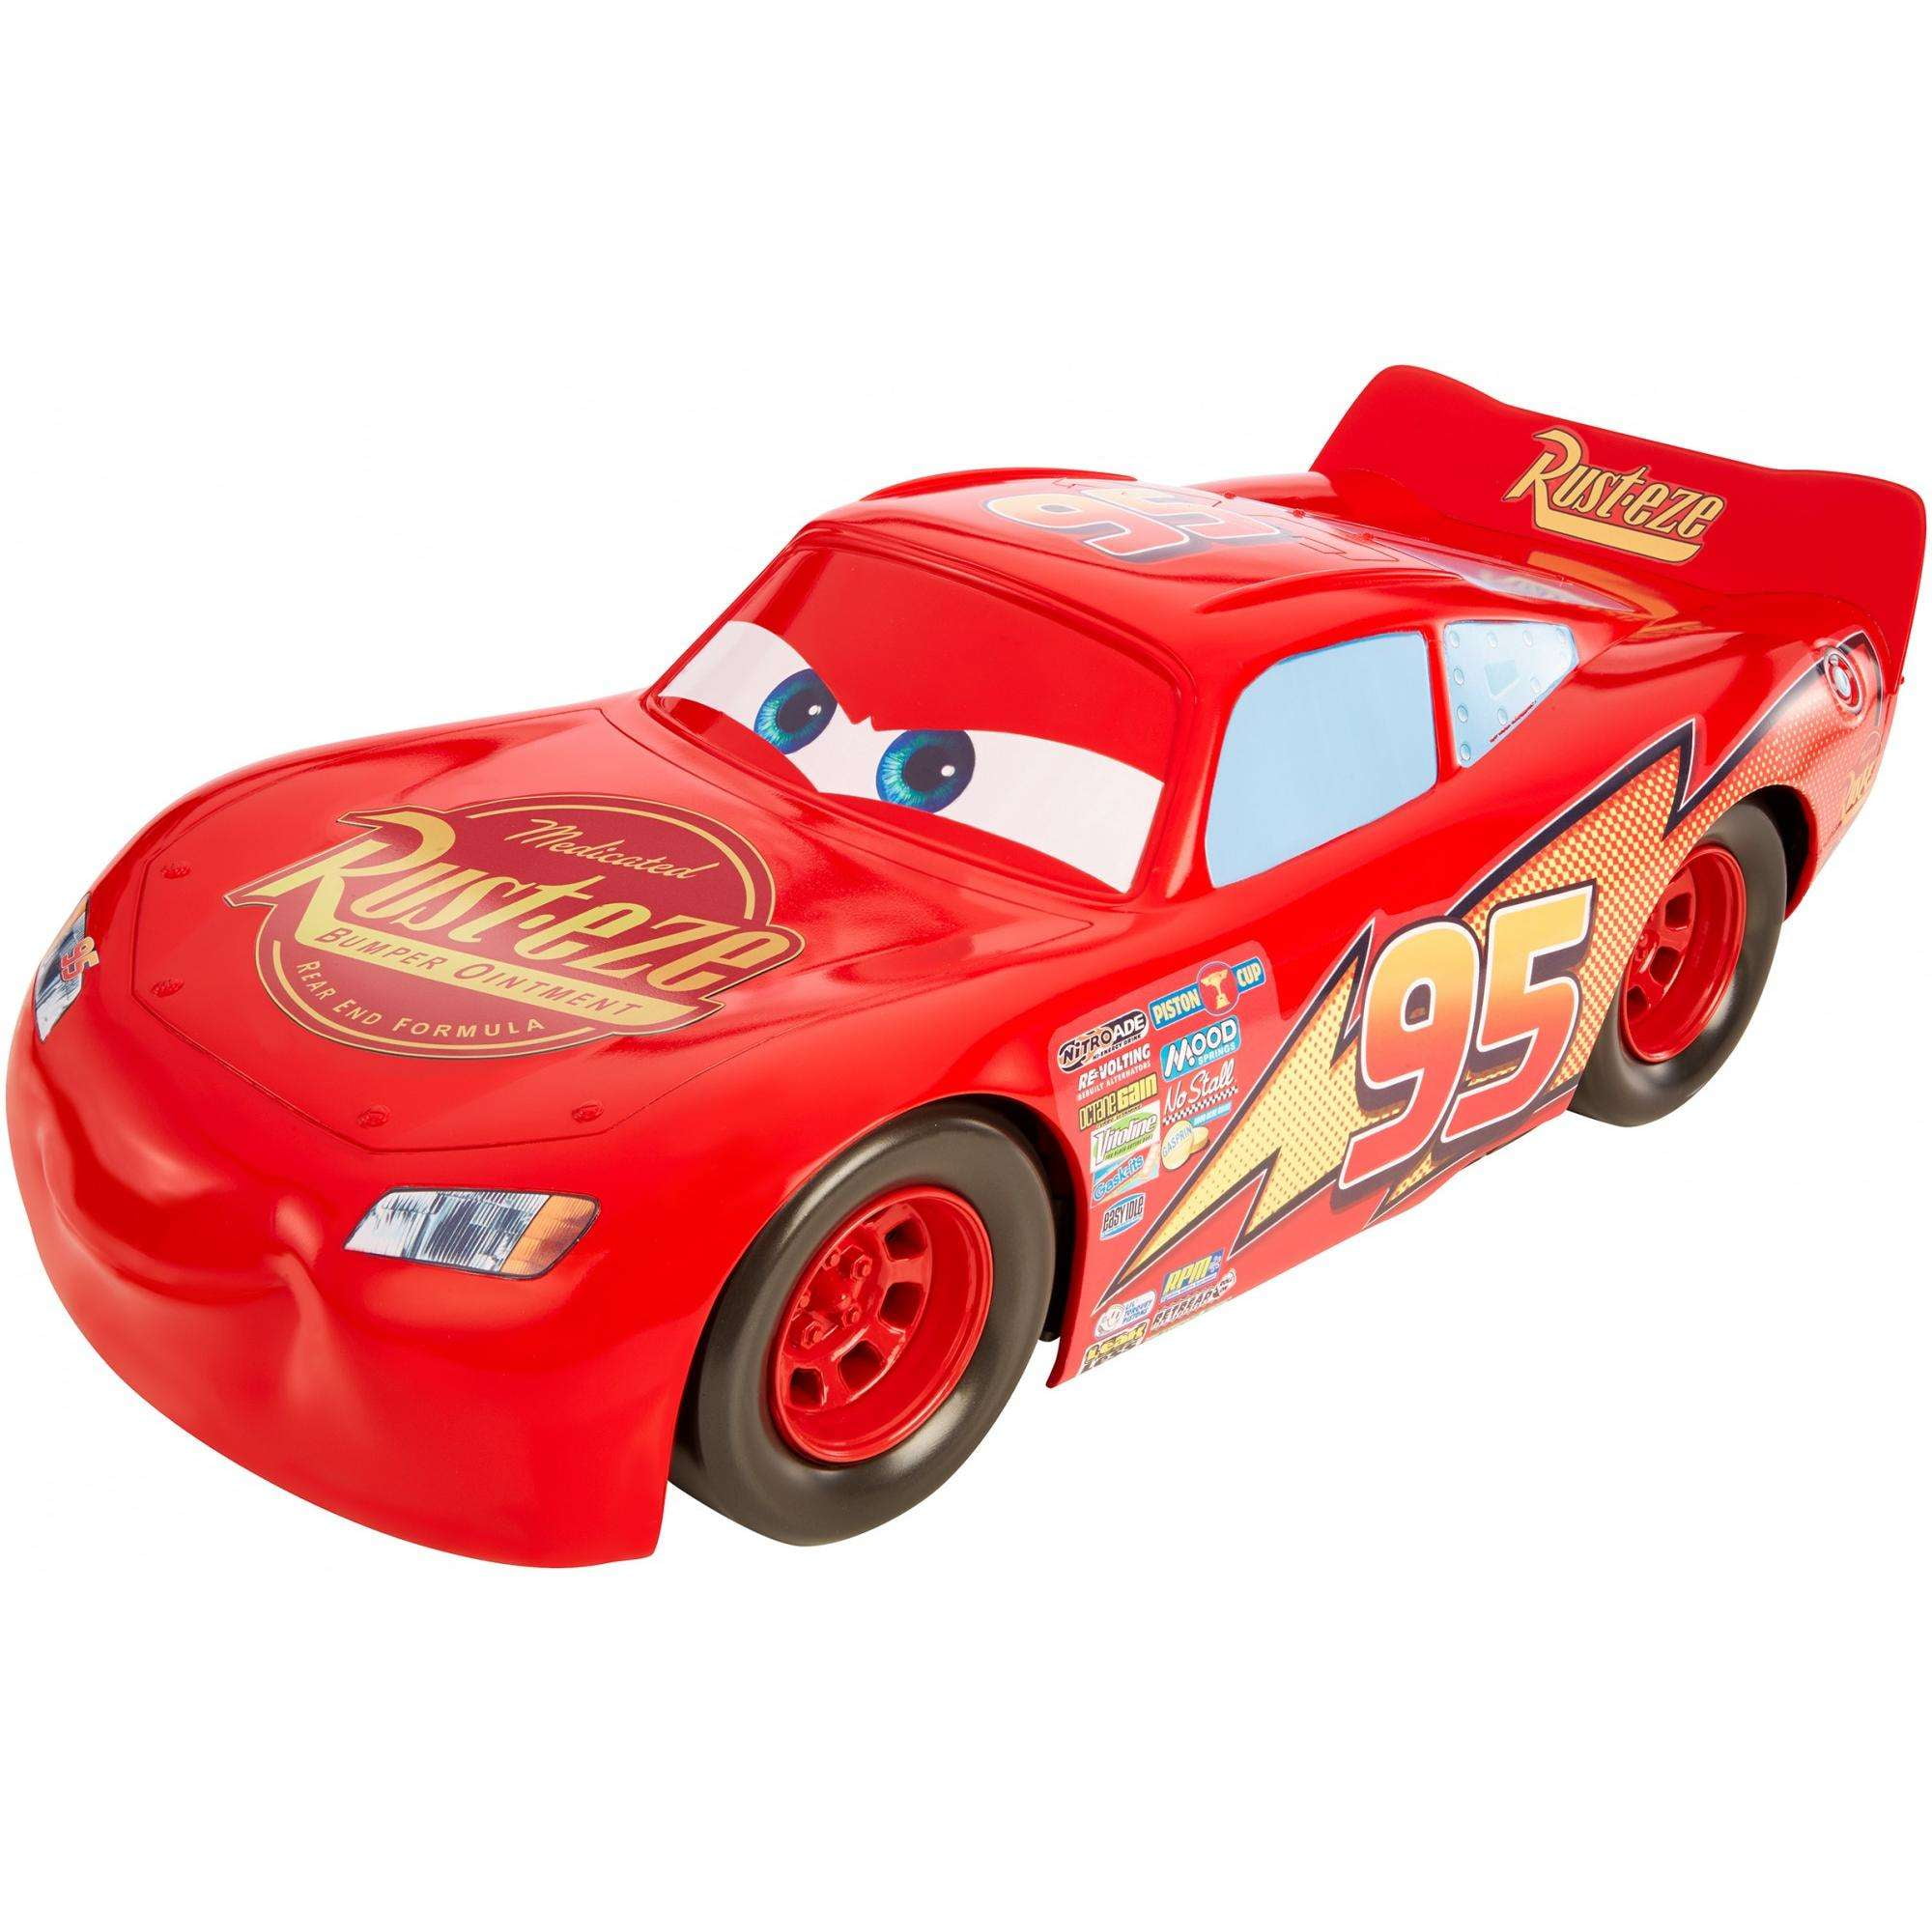 Disney Pixar Cars Chunky Lightning McQueen Toy Vehicle